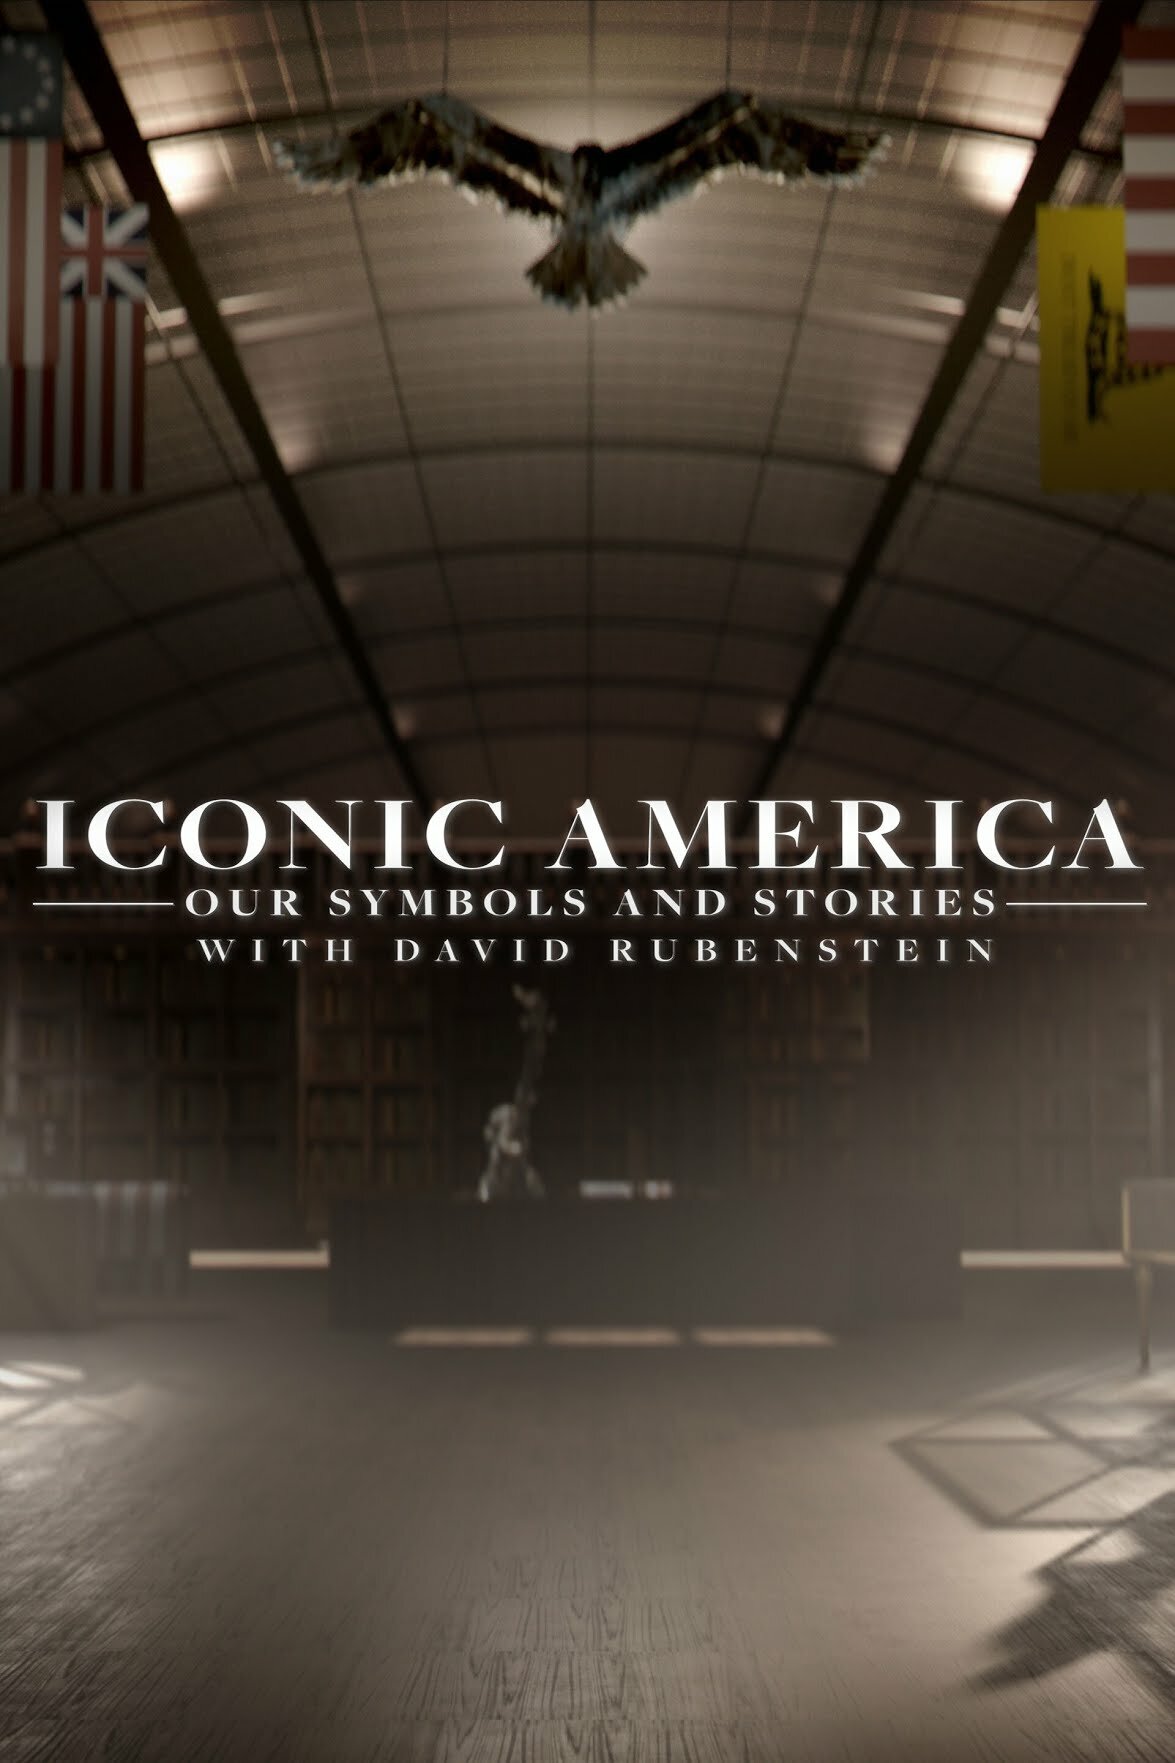 Iconic America: Our Symbols and Stories with David Rubenstein ne zaman